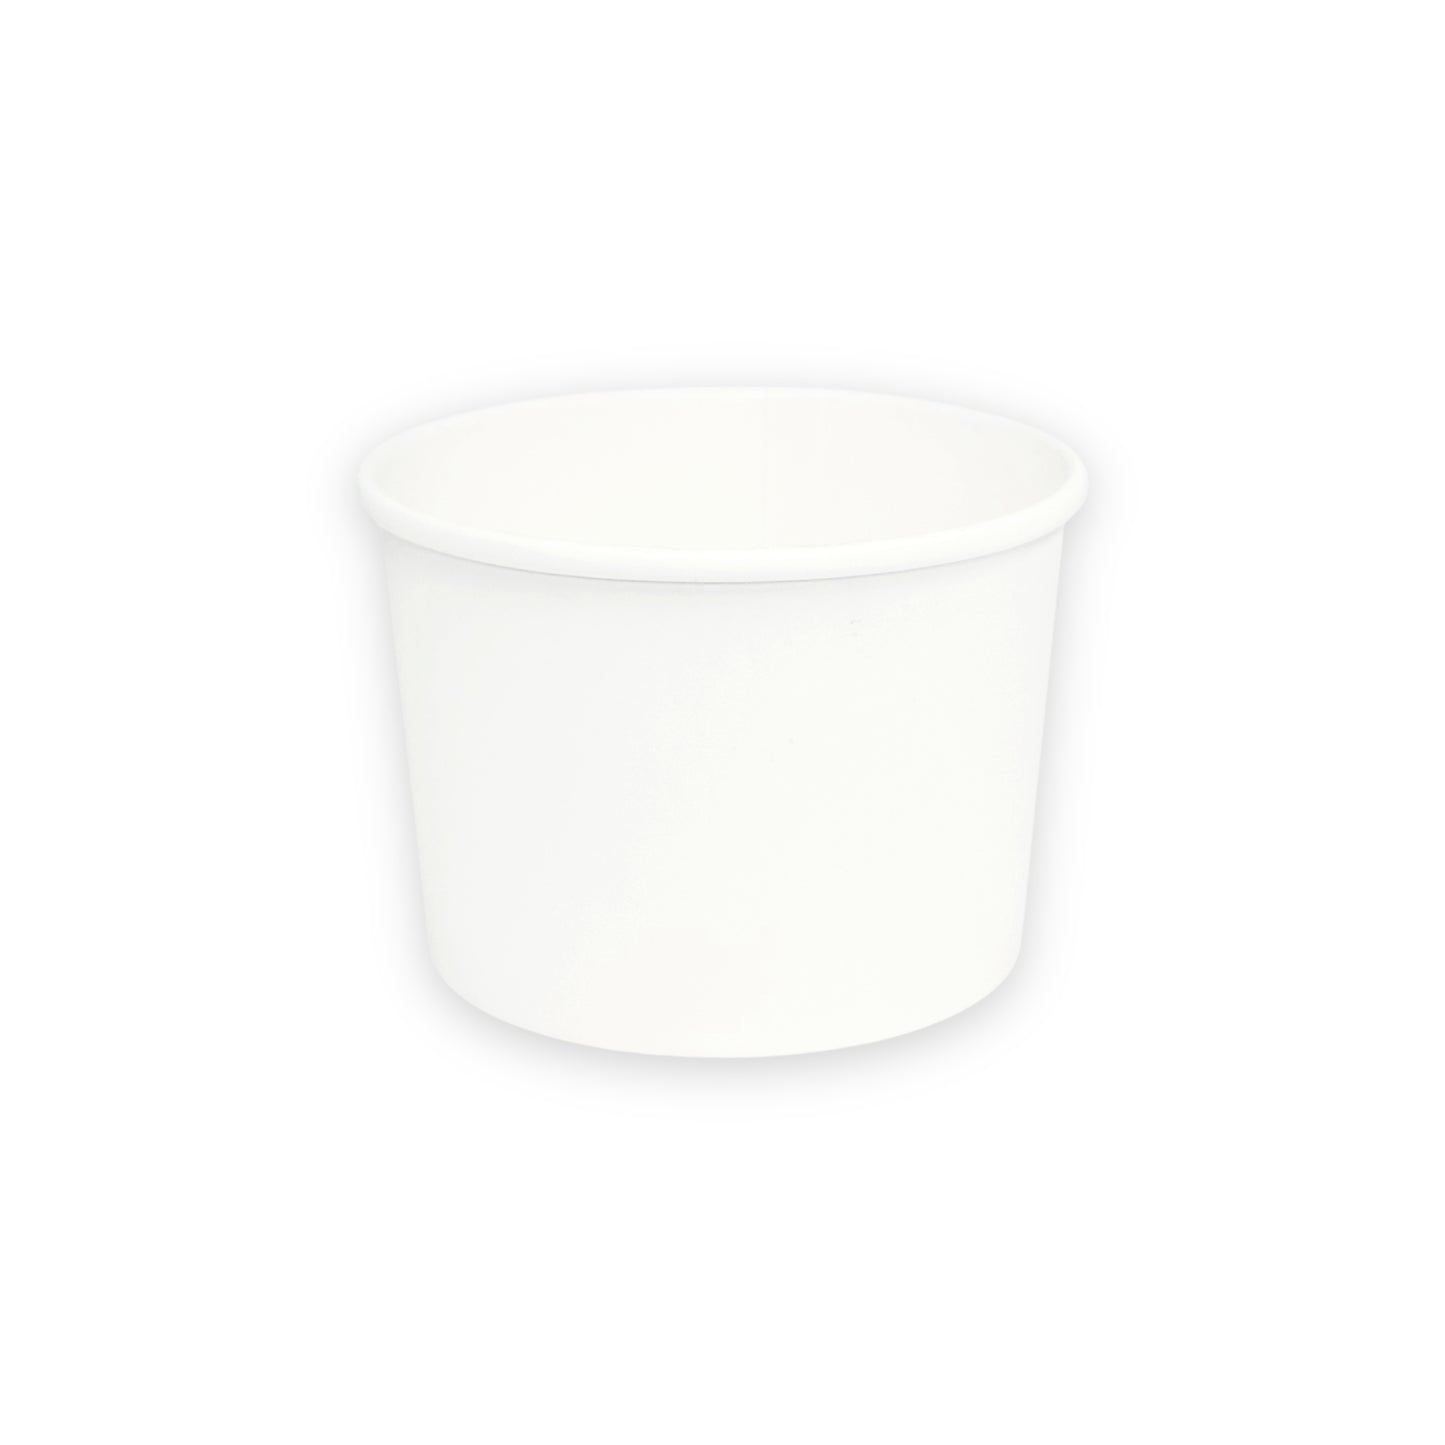 KIS-EM08G | 8oz, 240ml White Paper Soup Cup Base; From $0.067/pc